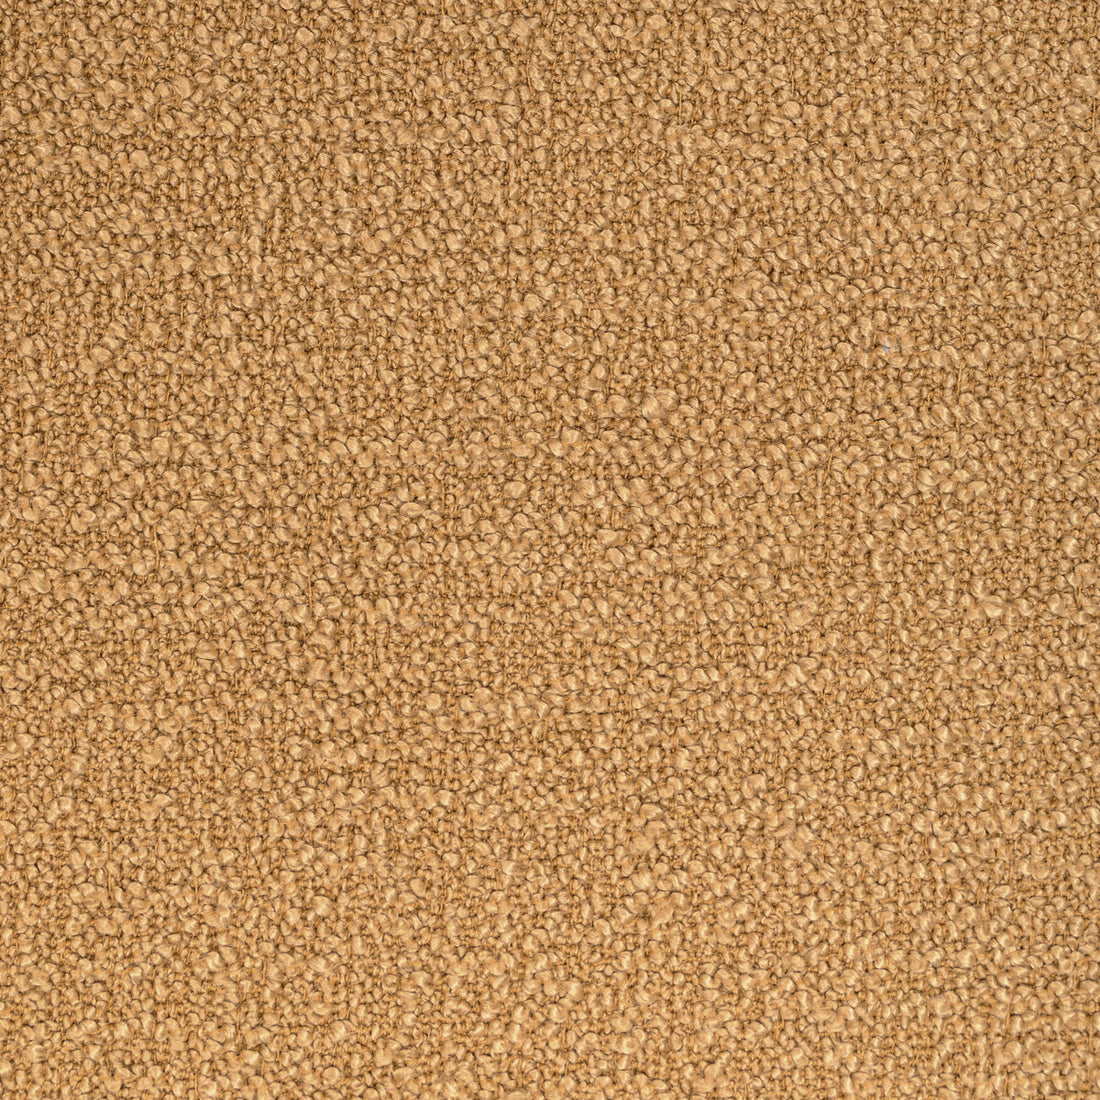 Kravet Smart fabric in 36857-1624 color - pattern 36857.1624.0 - by Kravet Smart in the Performance Kravetarmor collection